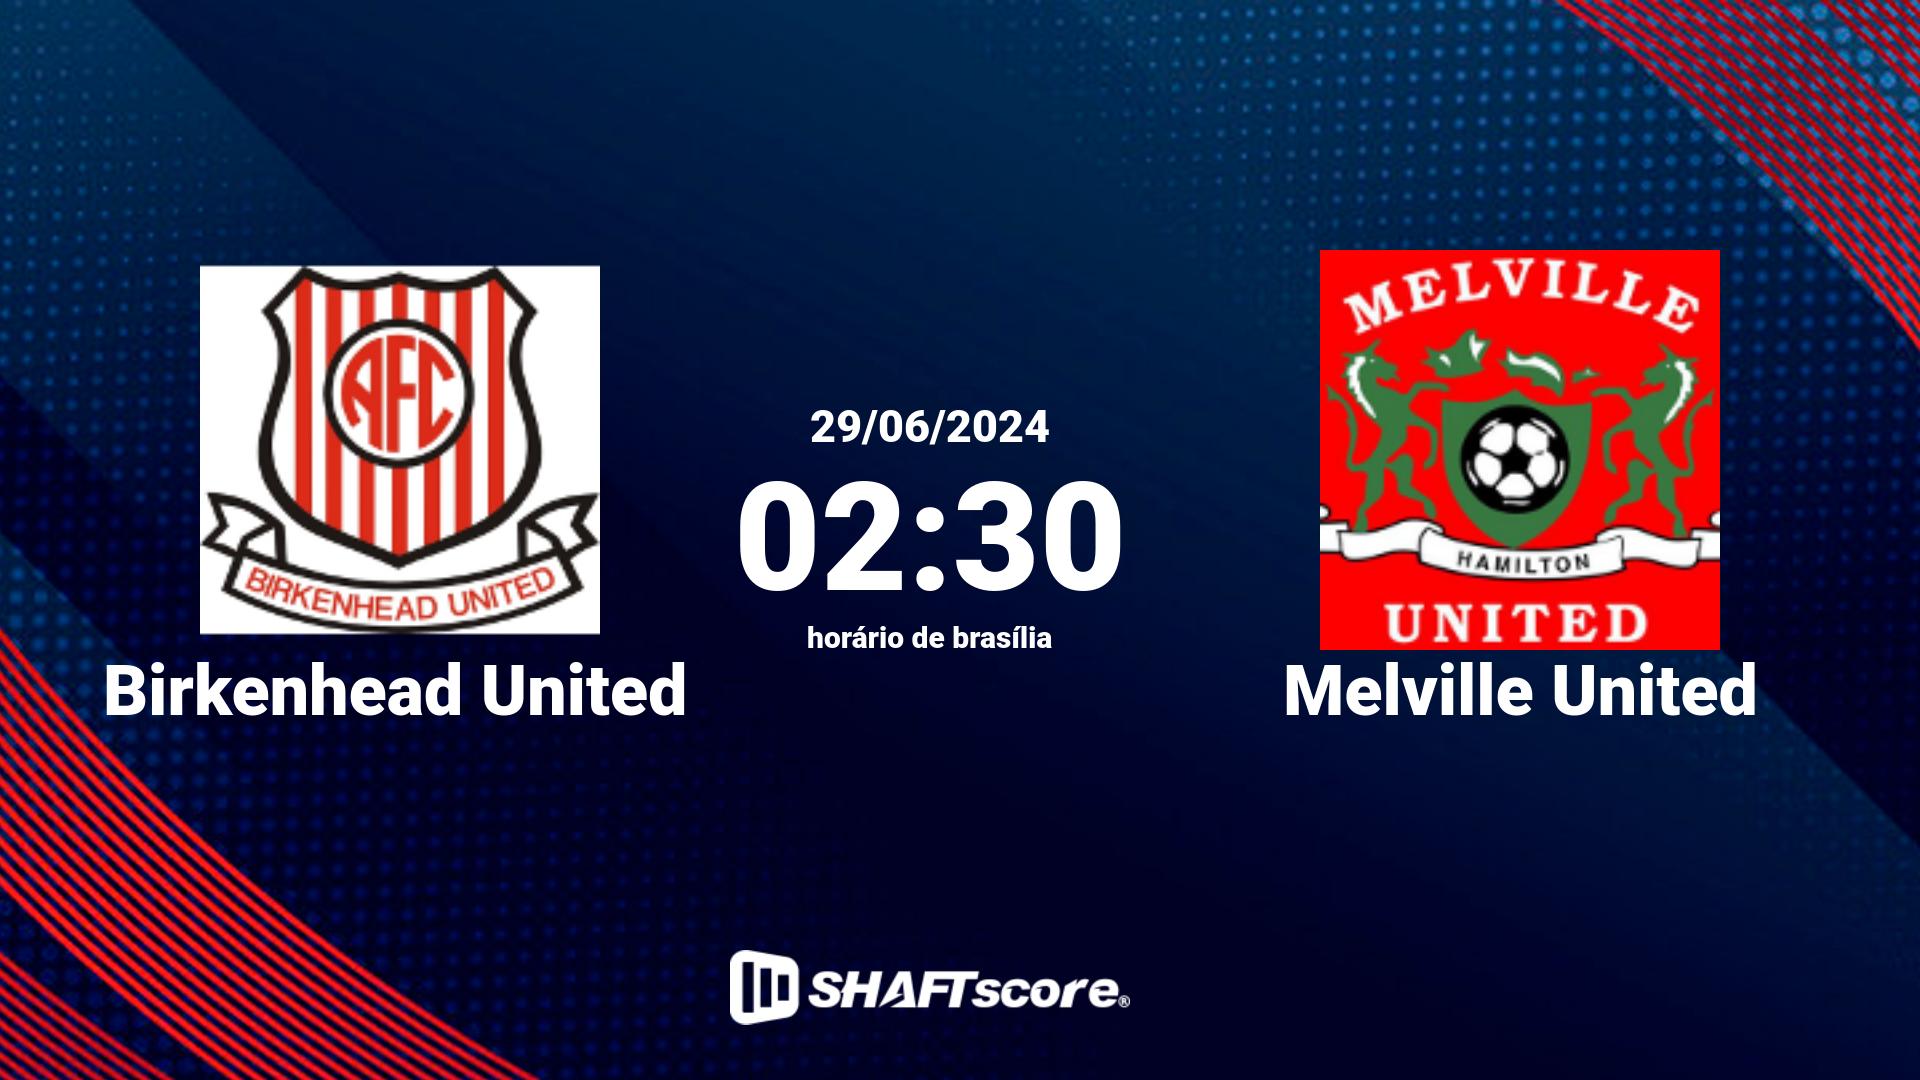 Estatísticas do jogo Birkenhead United vs Melville United 29.06 02:30